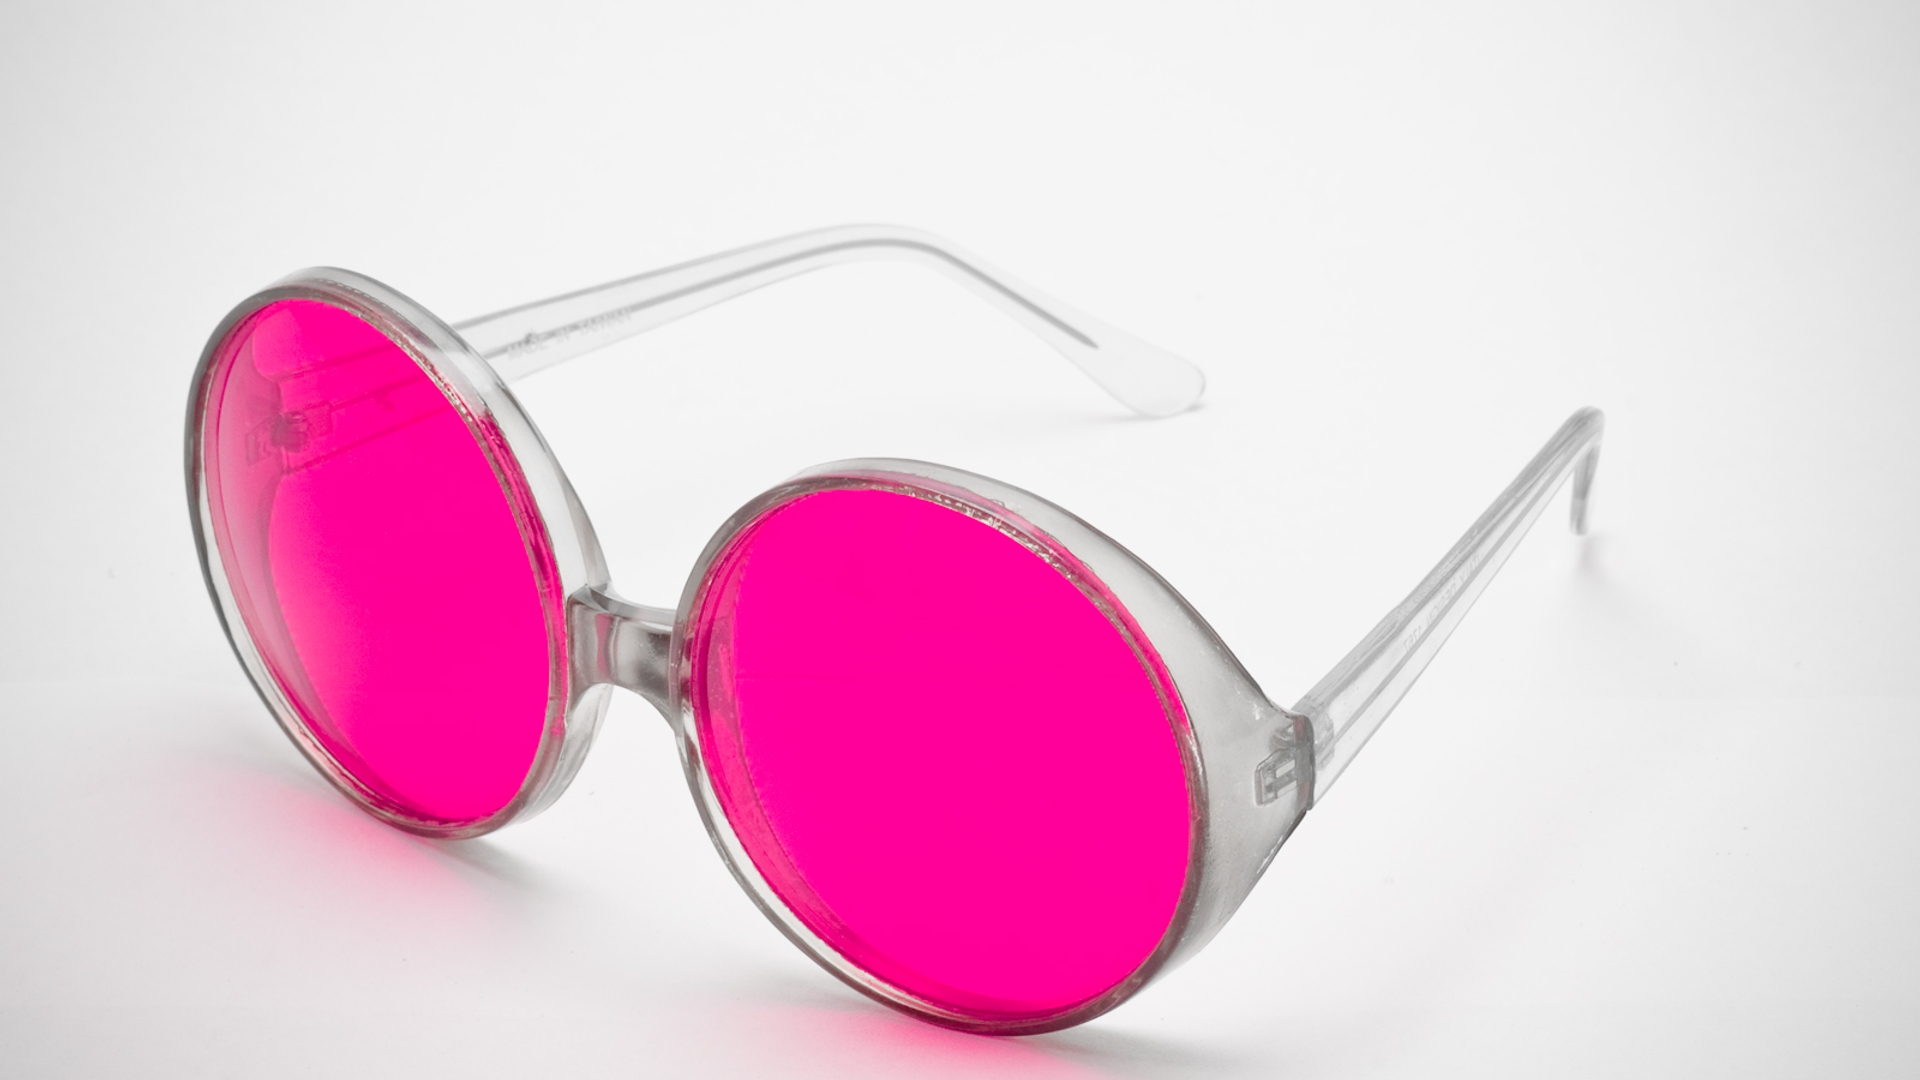 Through Rose coloured glasses